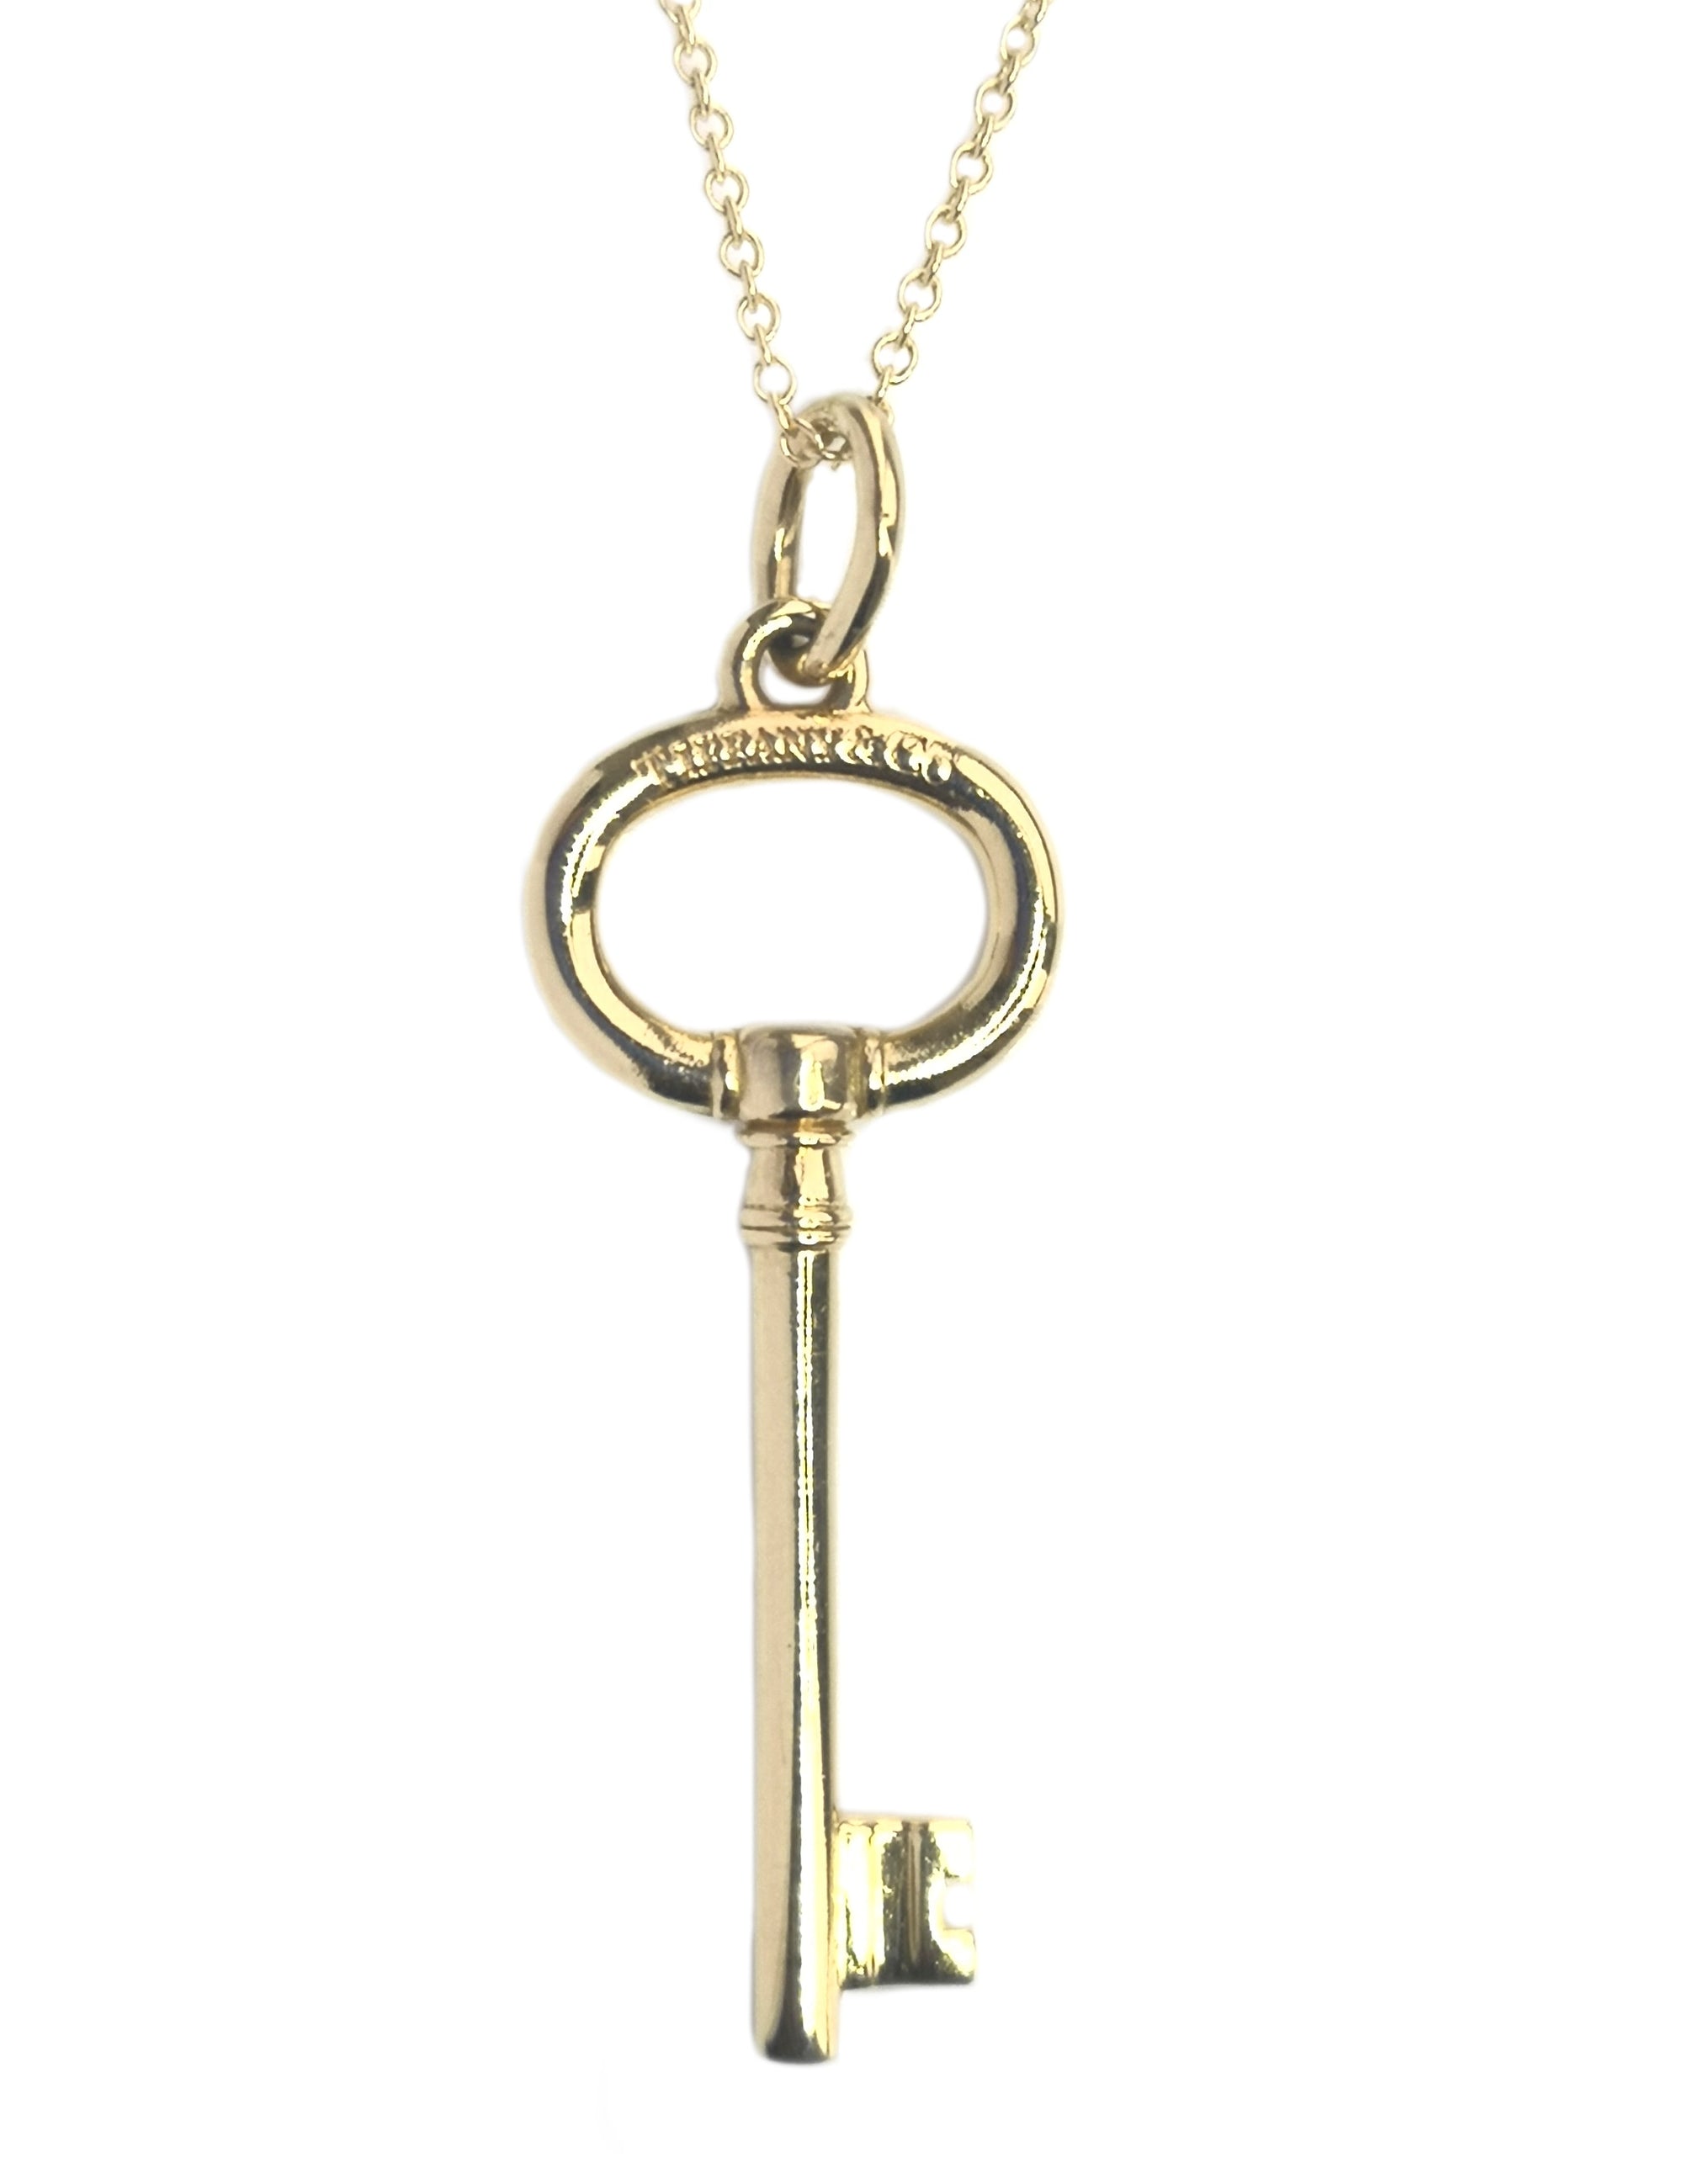 Tiffany & Co. 18k Yellow Gold Key Pendant, 16in chain